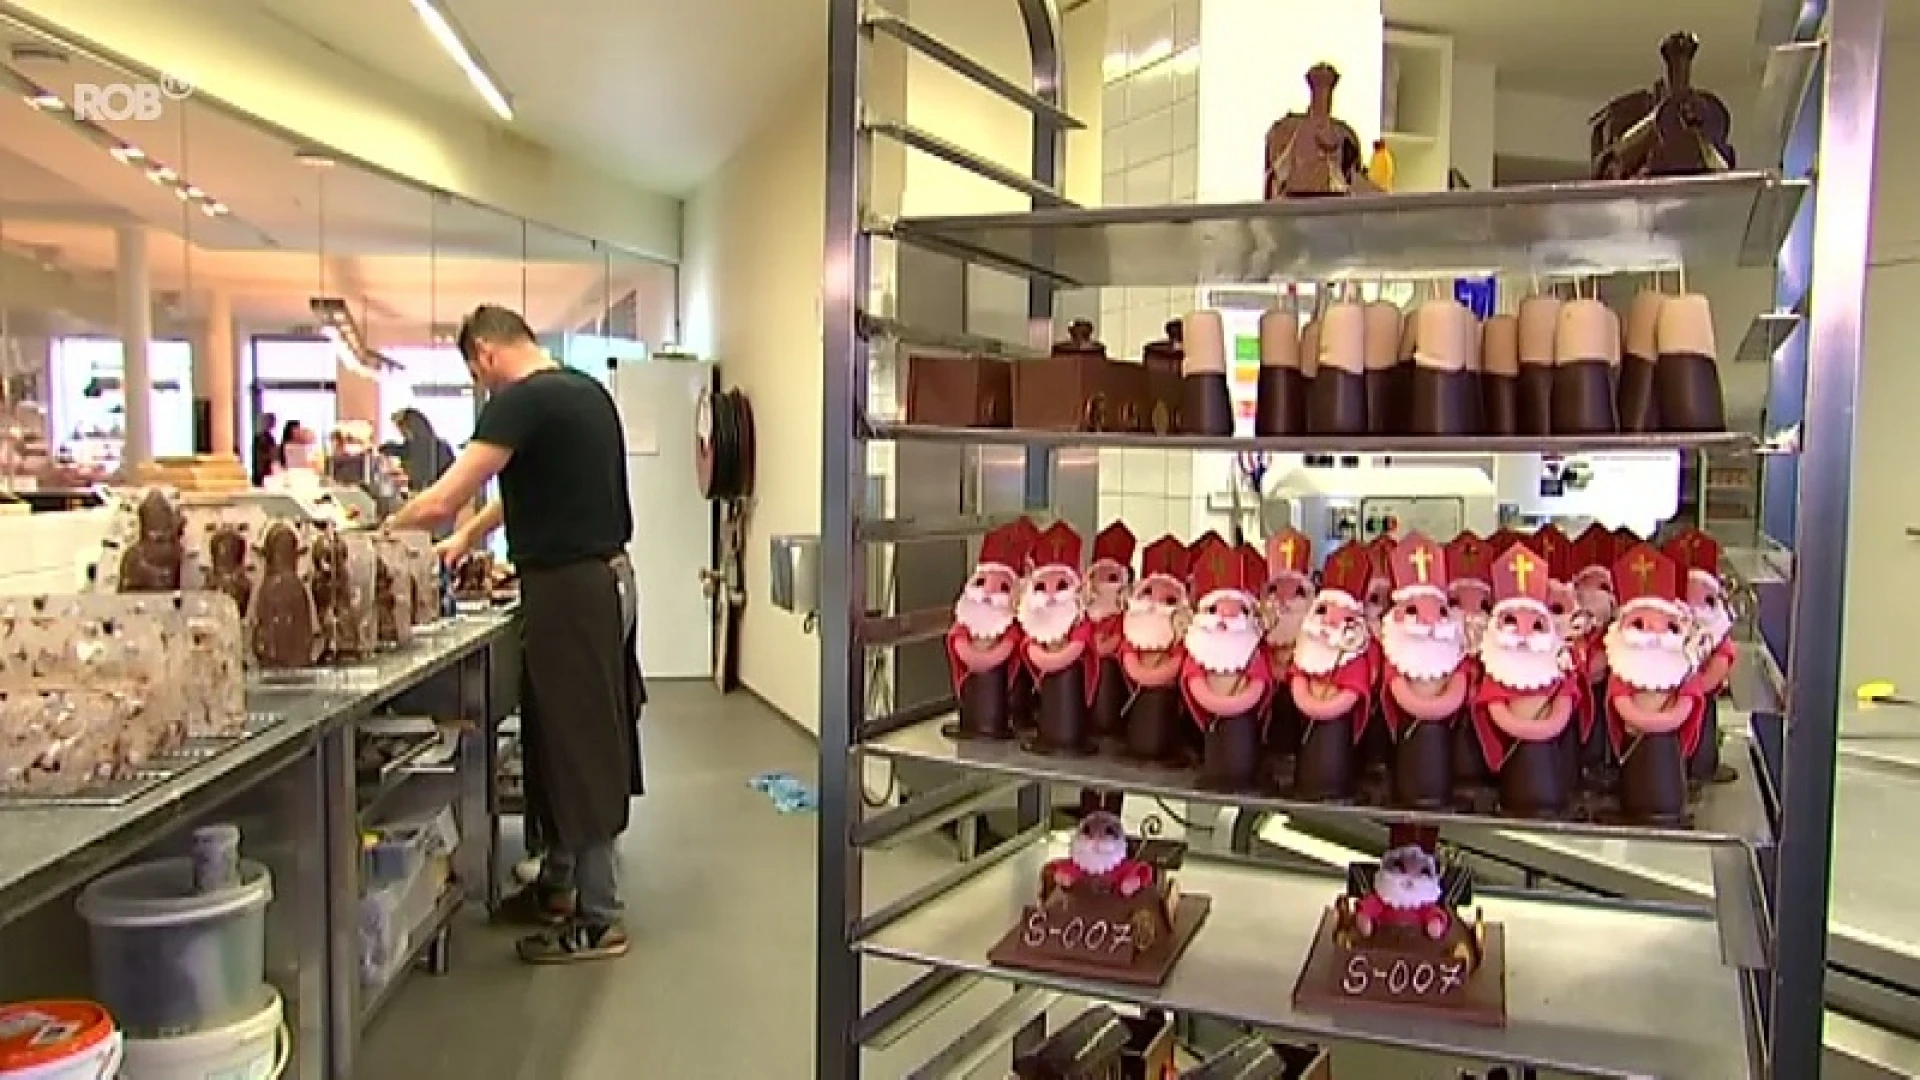 Stuckens uit Diest helpt Sinterklaas om schoentjes te vullen: "We bakken zo'n 40 kilogram speculaas per dag"